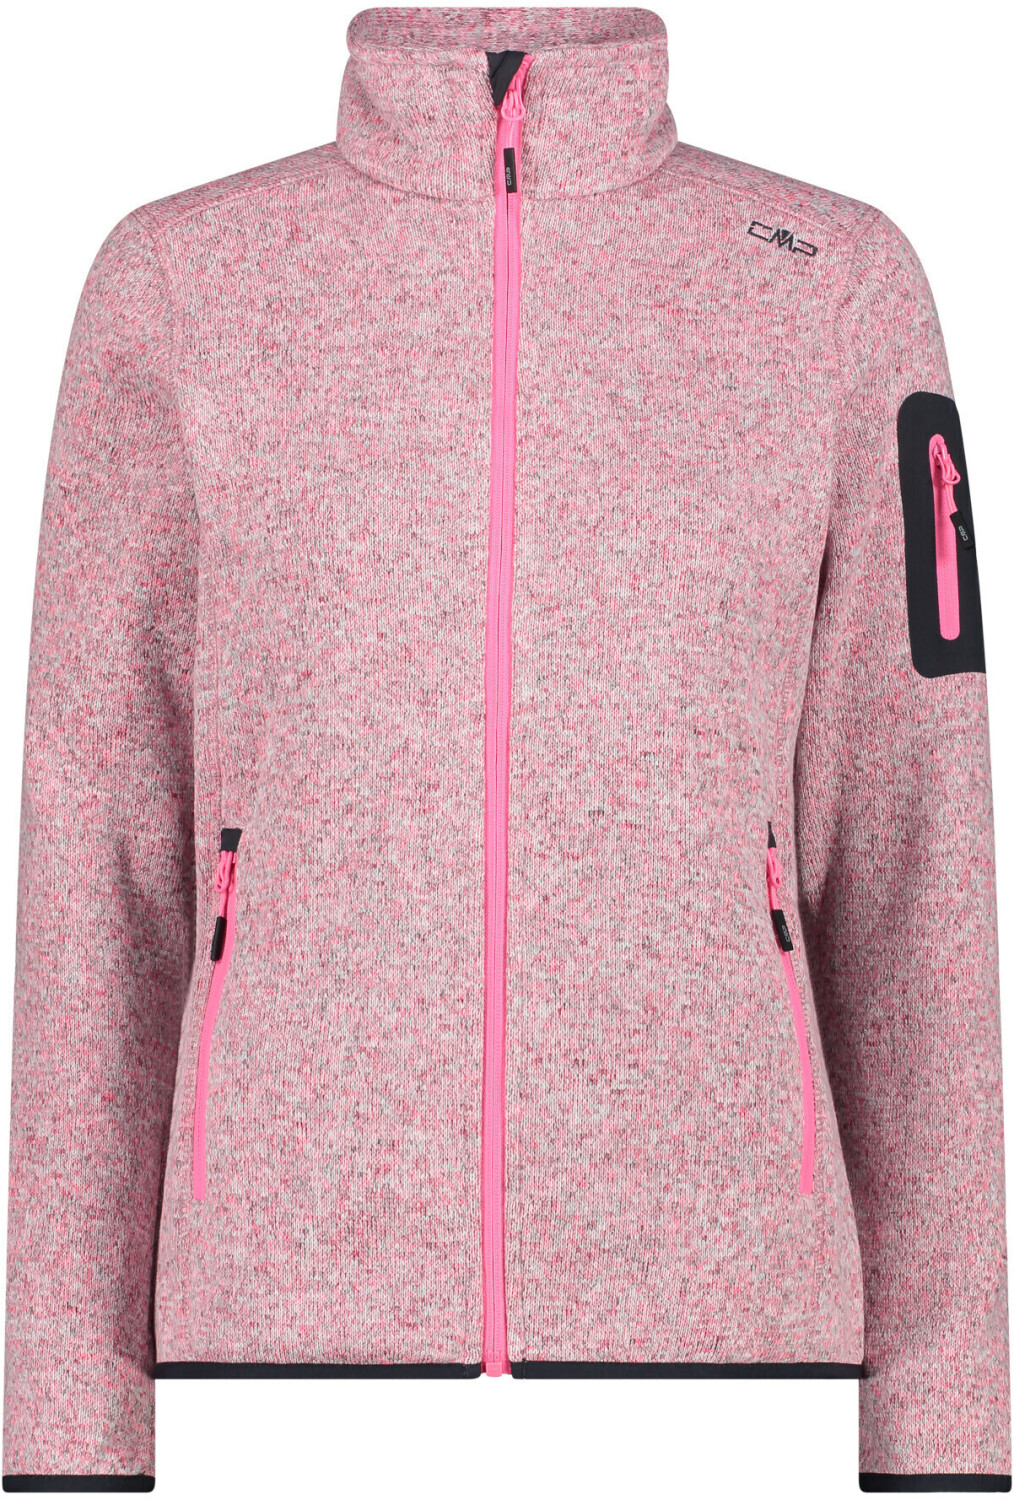 Buy CMP Fleece Jacket Best (3H14746) fluo-bianco Deals on Knit-Tech Melange £34.99 (Today) from – pink